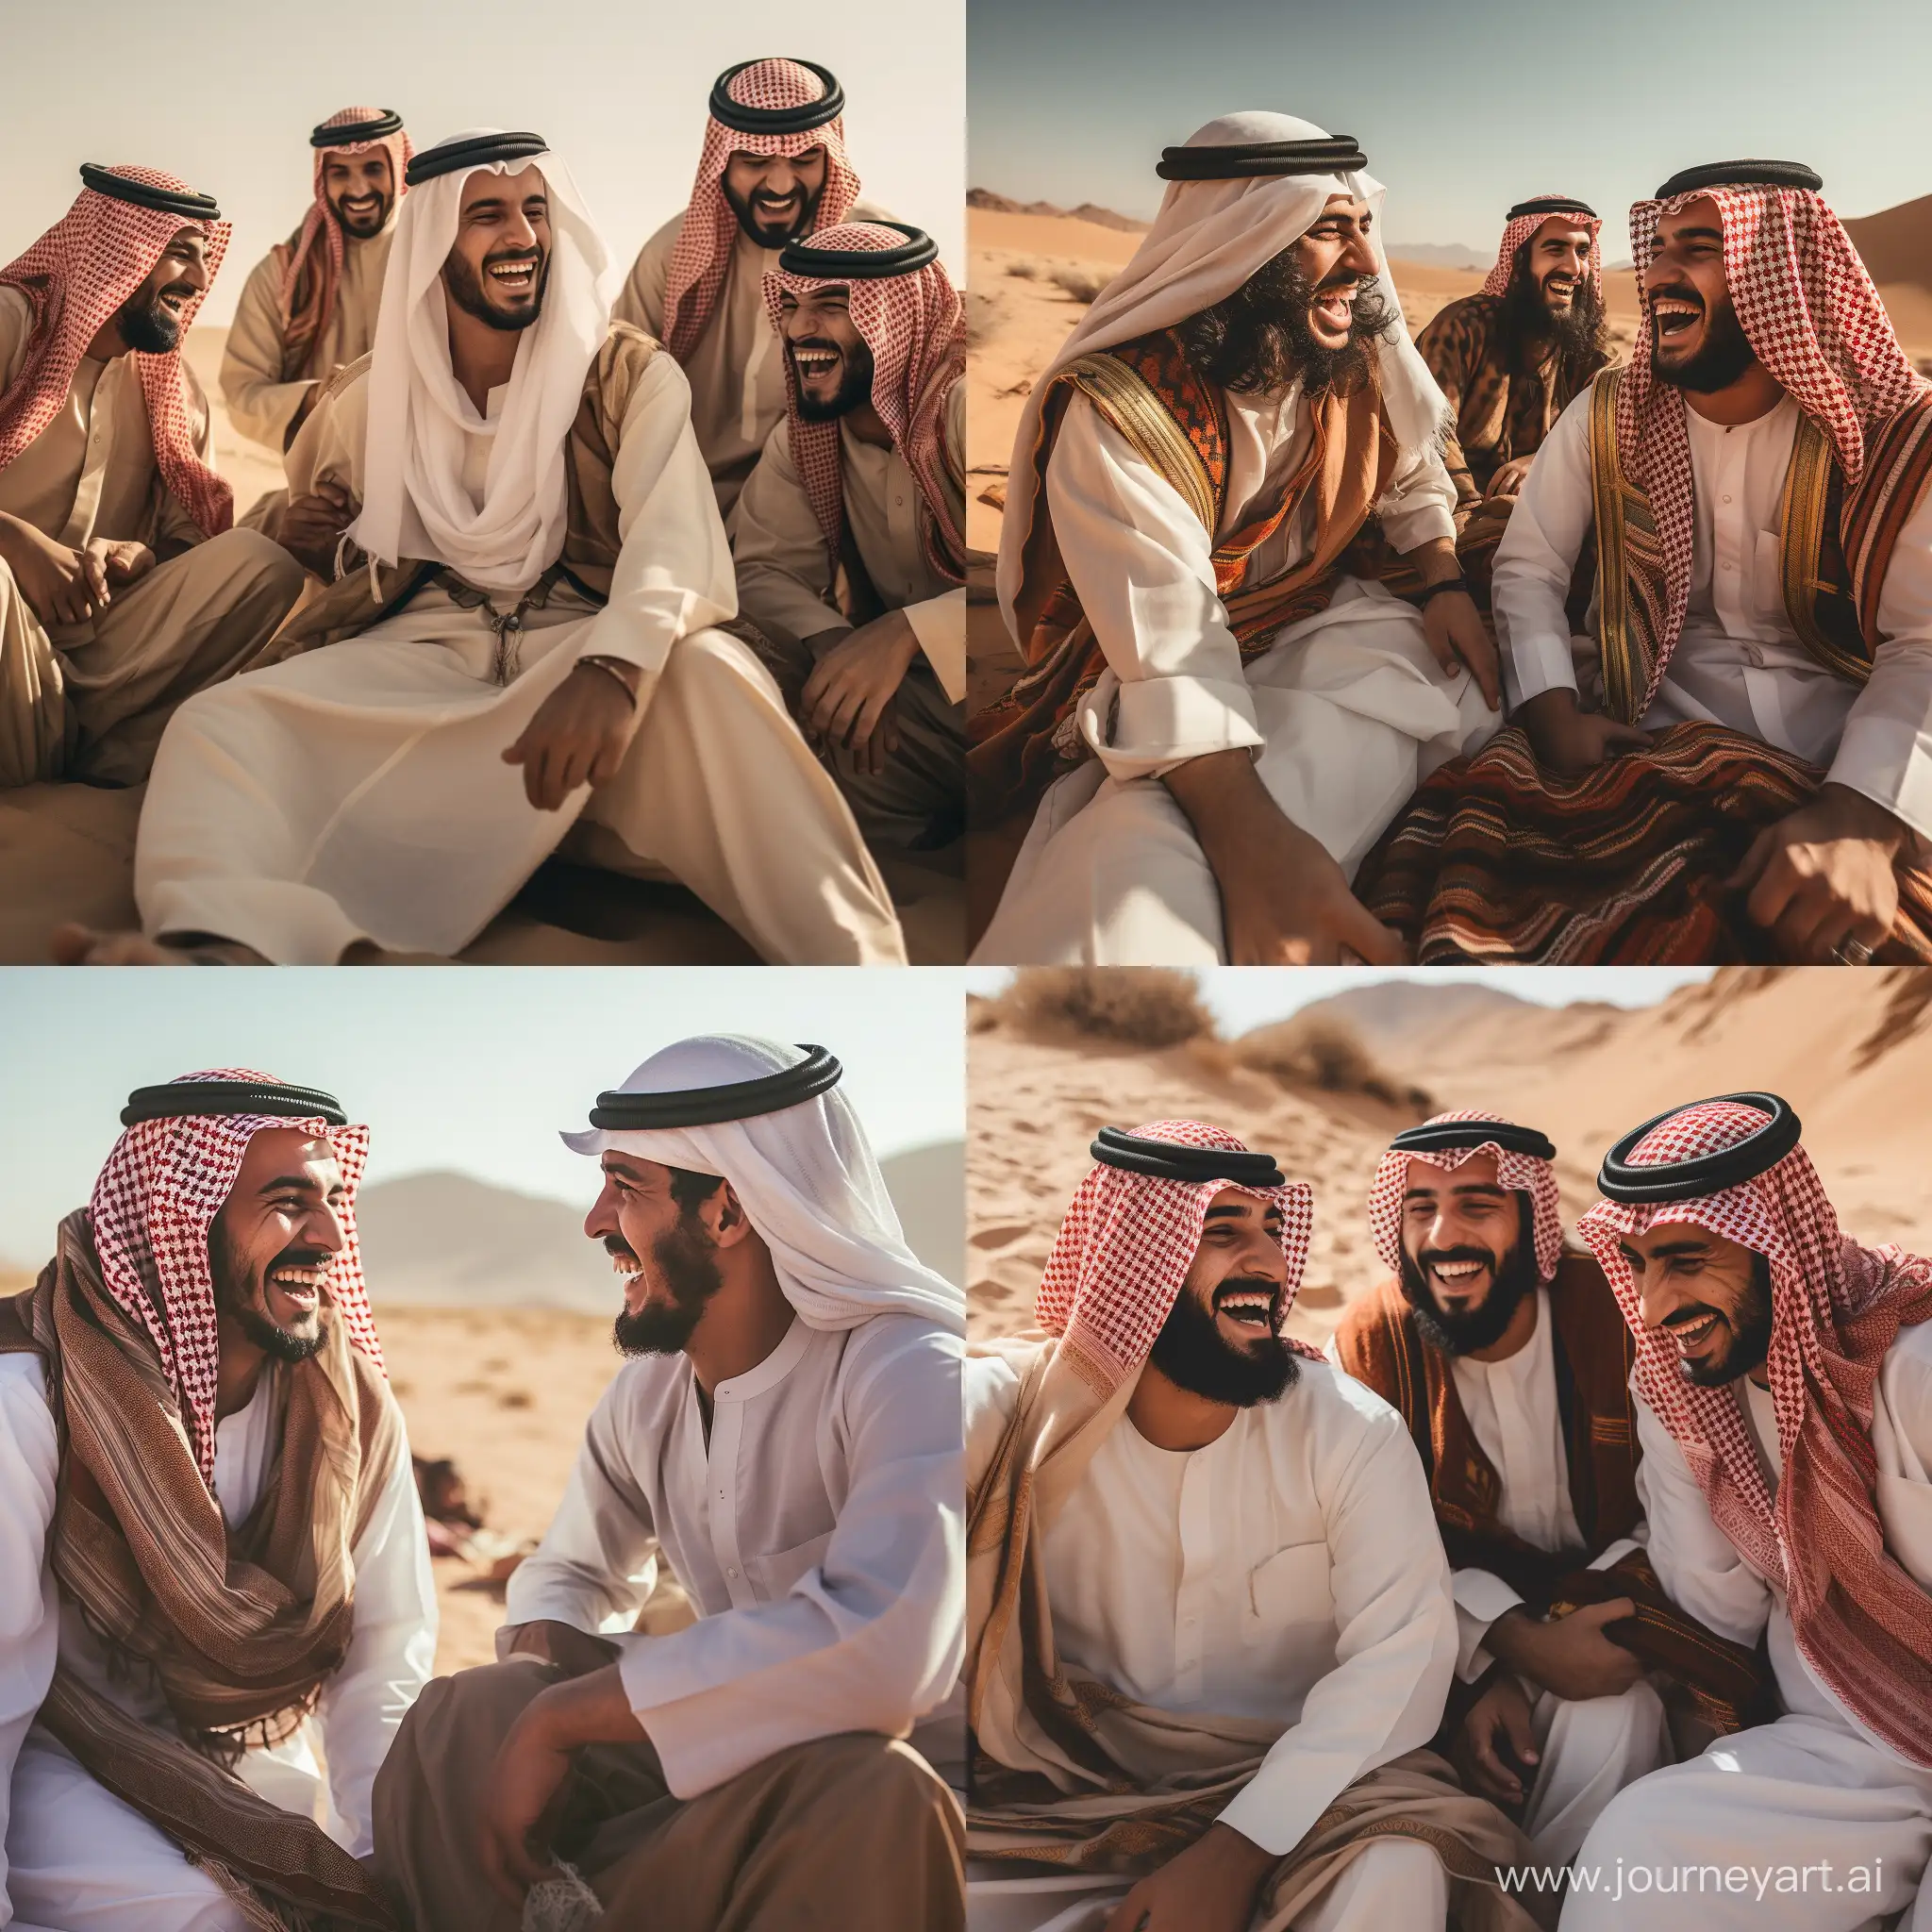 Joyful-Arab-Friends-Sharing-Laughter-in-the-Expansive-Desert